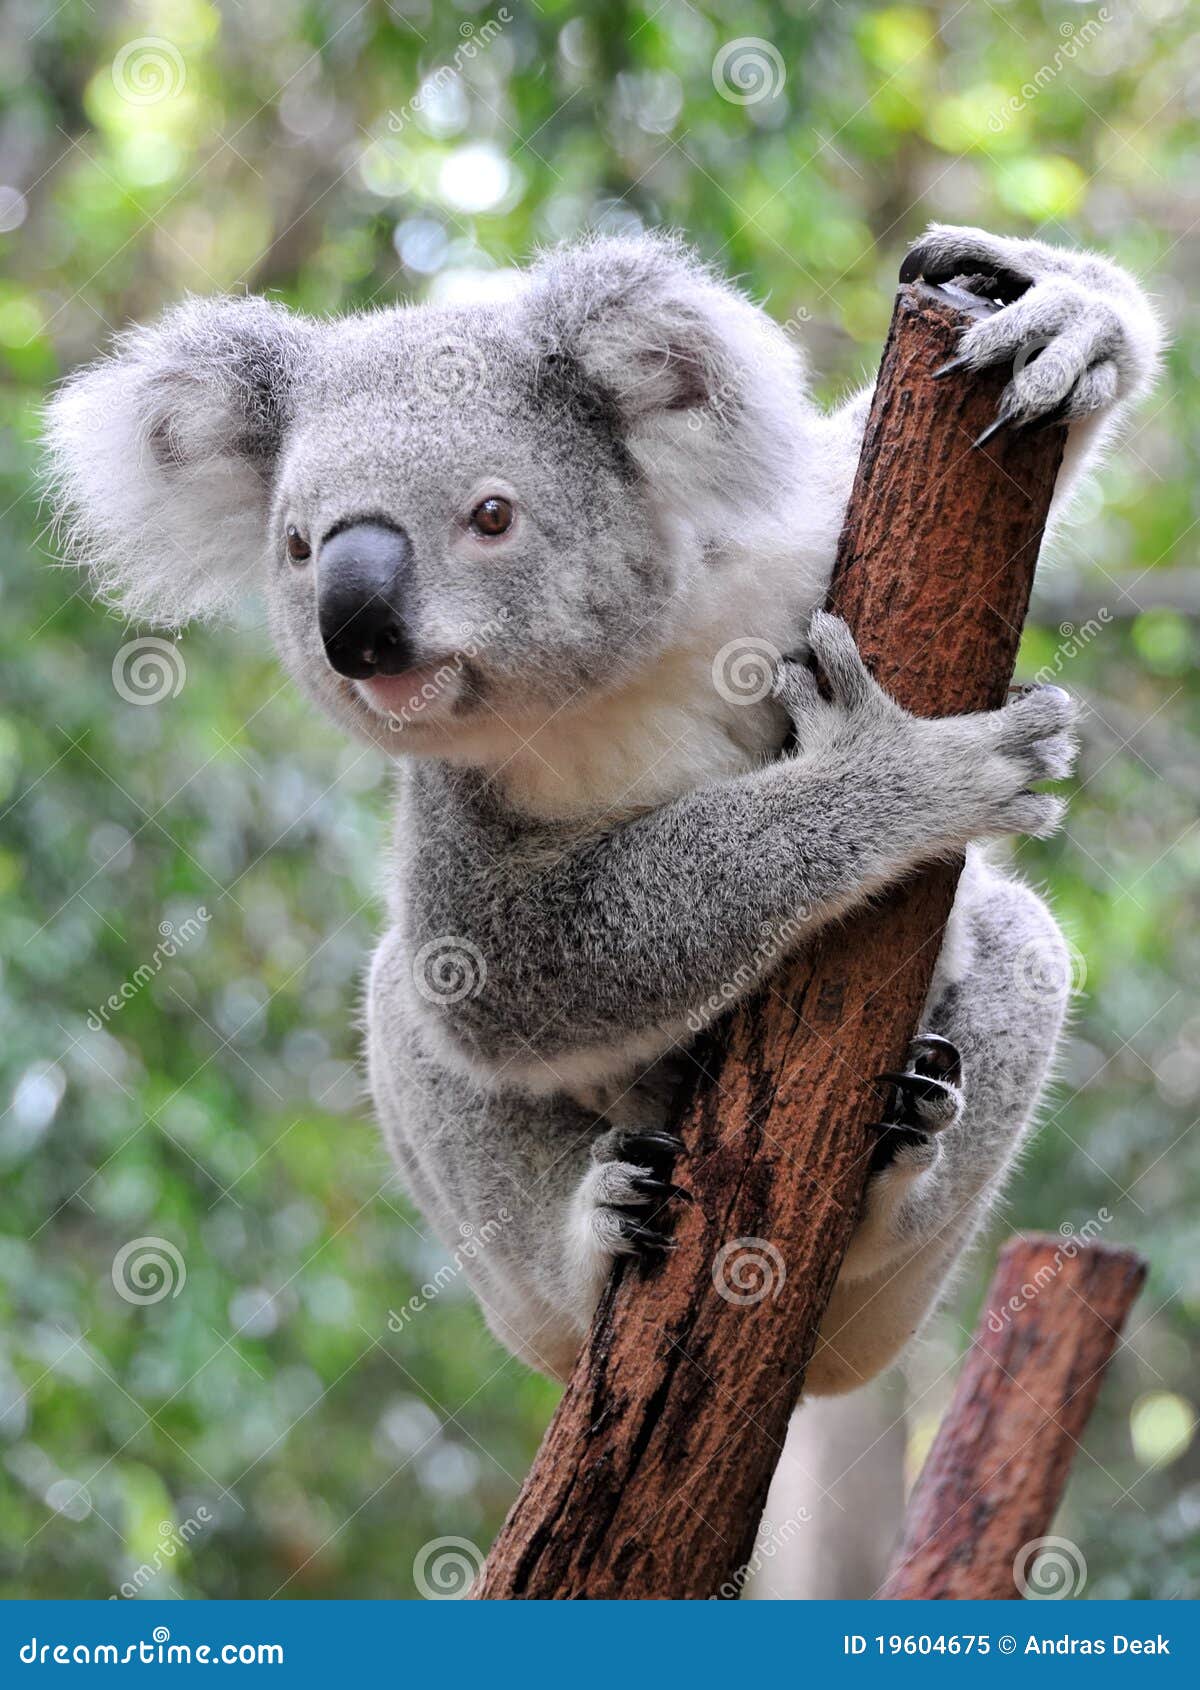 curious koala